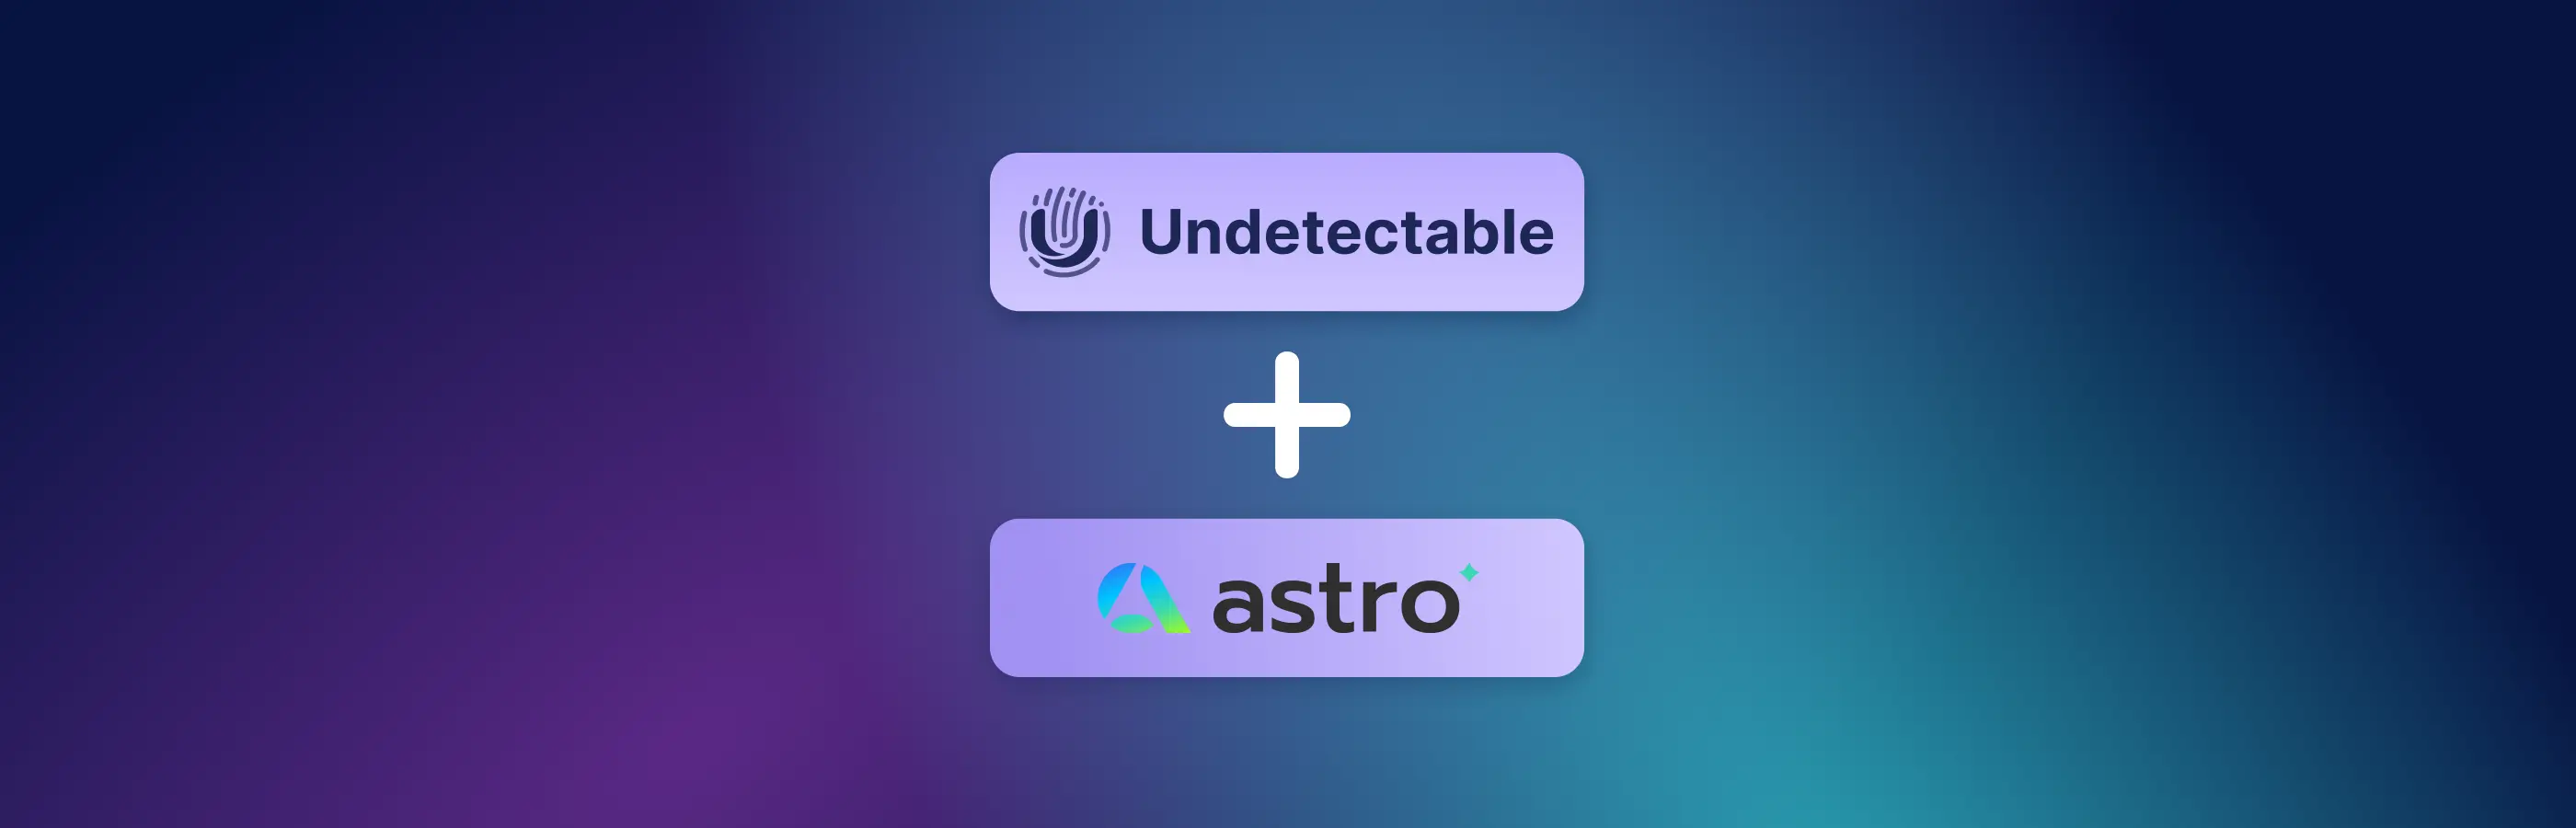 Cách sử dụng Astro với Undetectable